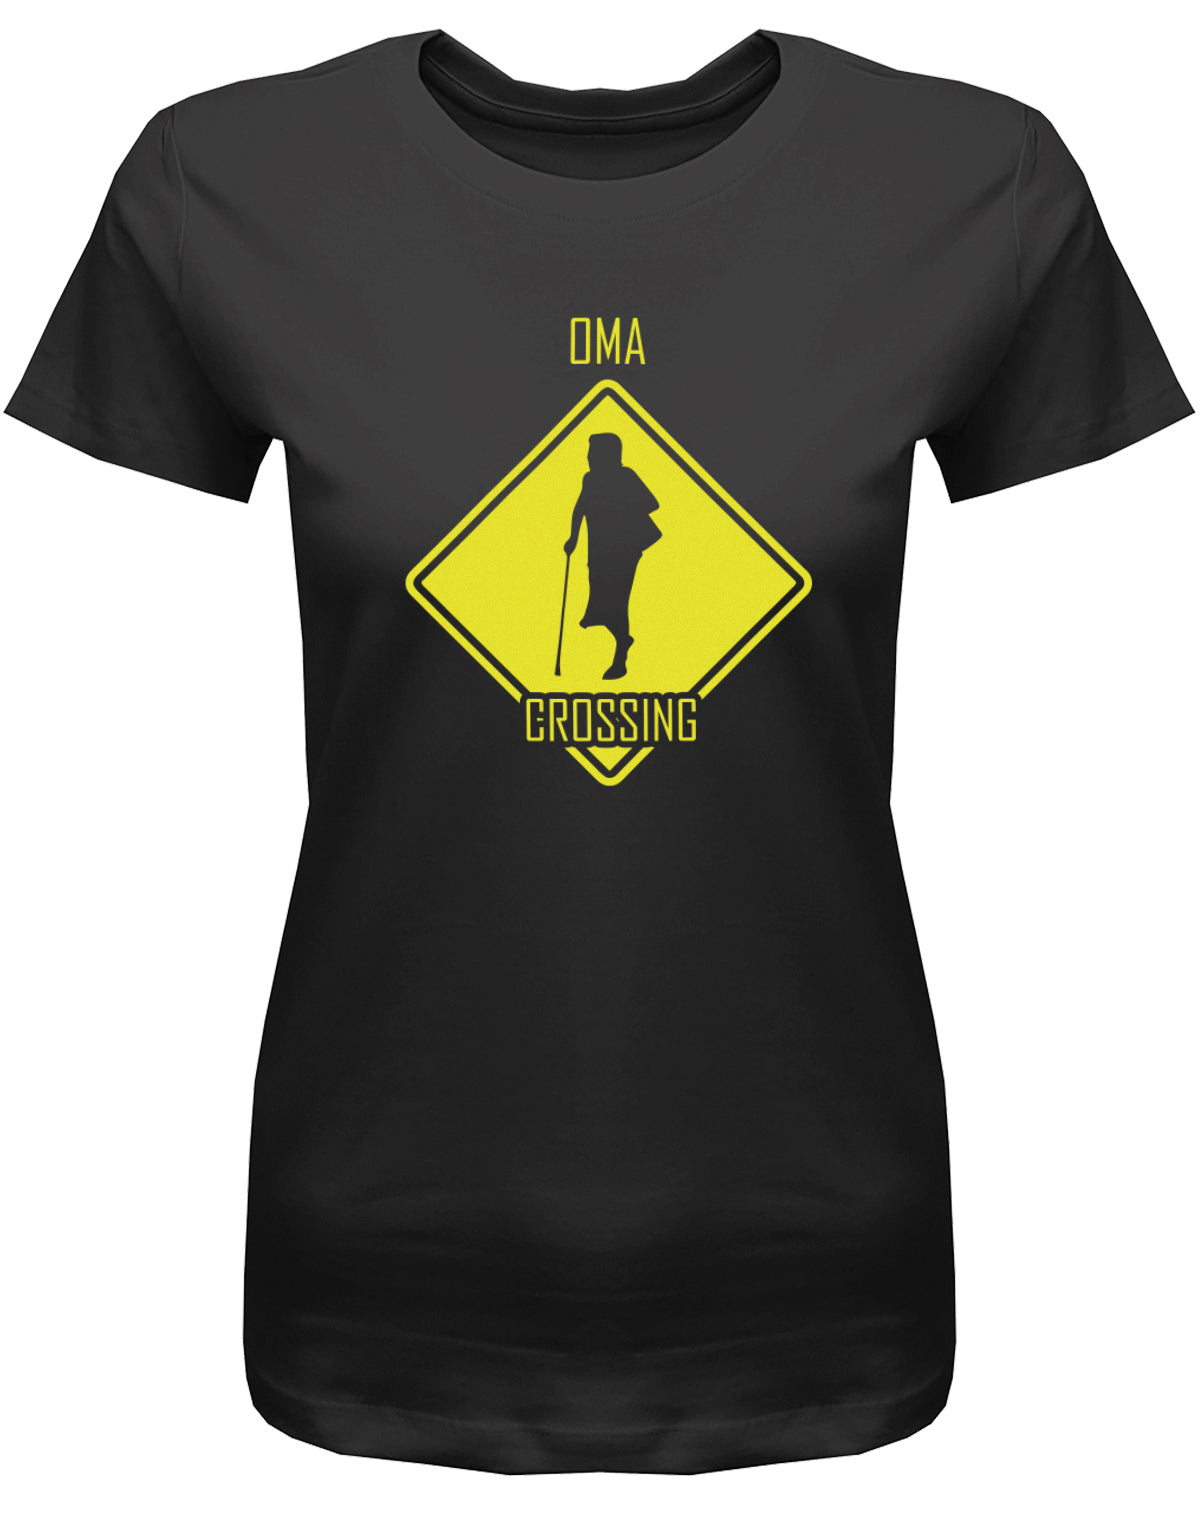 Oma Crossing - Achtung - Omi - Damen T-Shirt